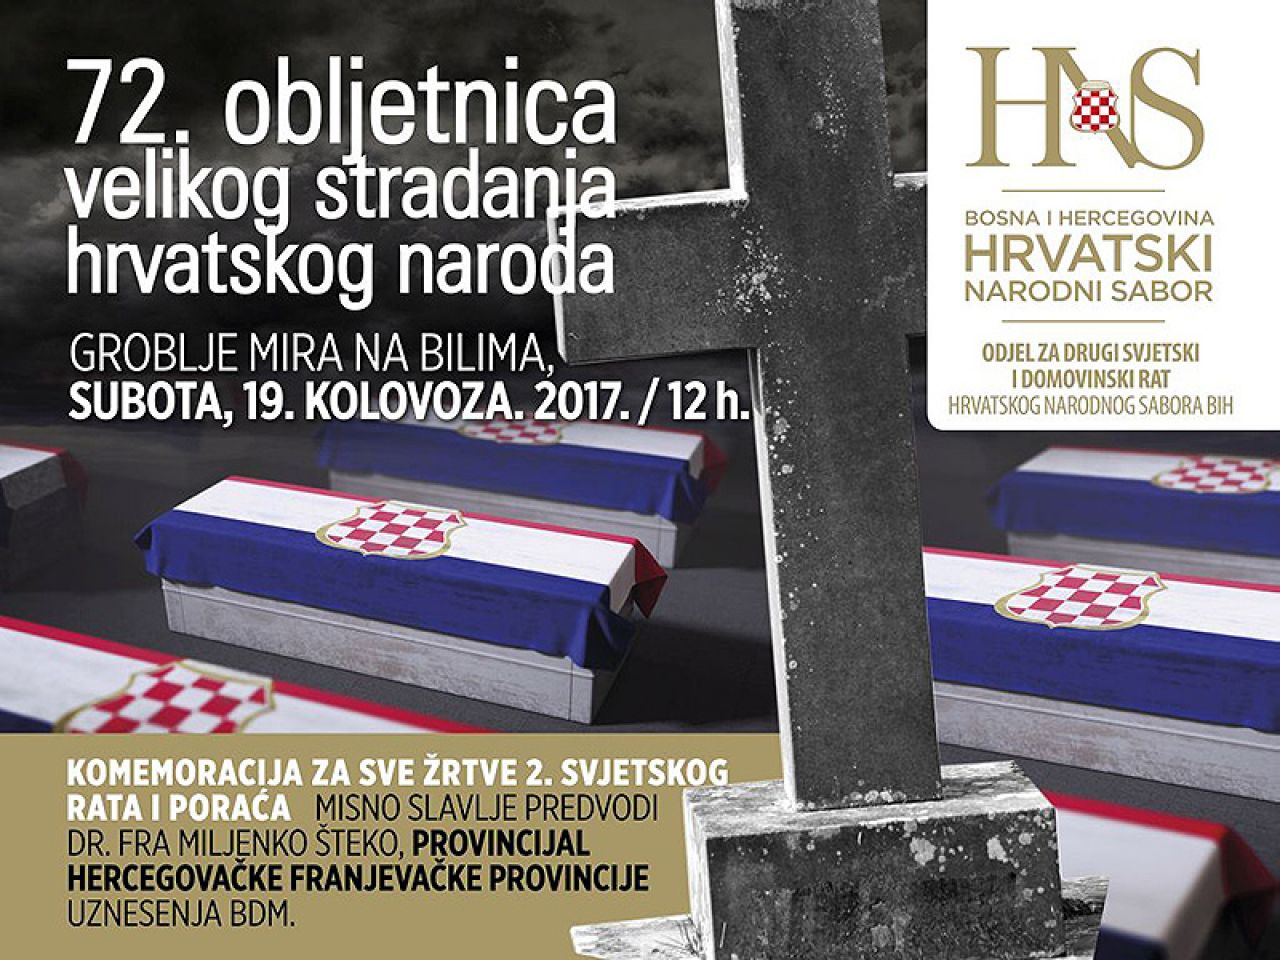 Obilježavanje 72. obljetnice velikog stradanja hrvatskog naroda